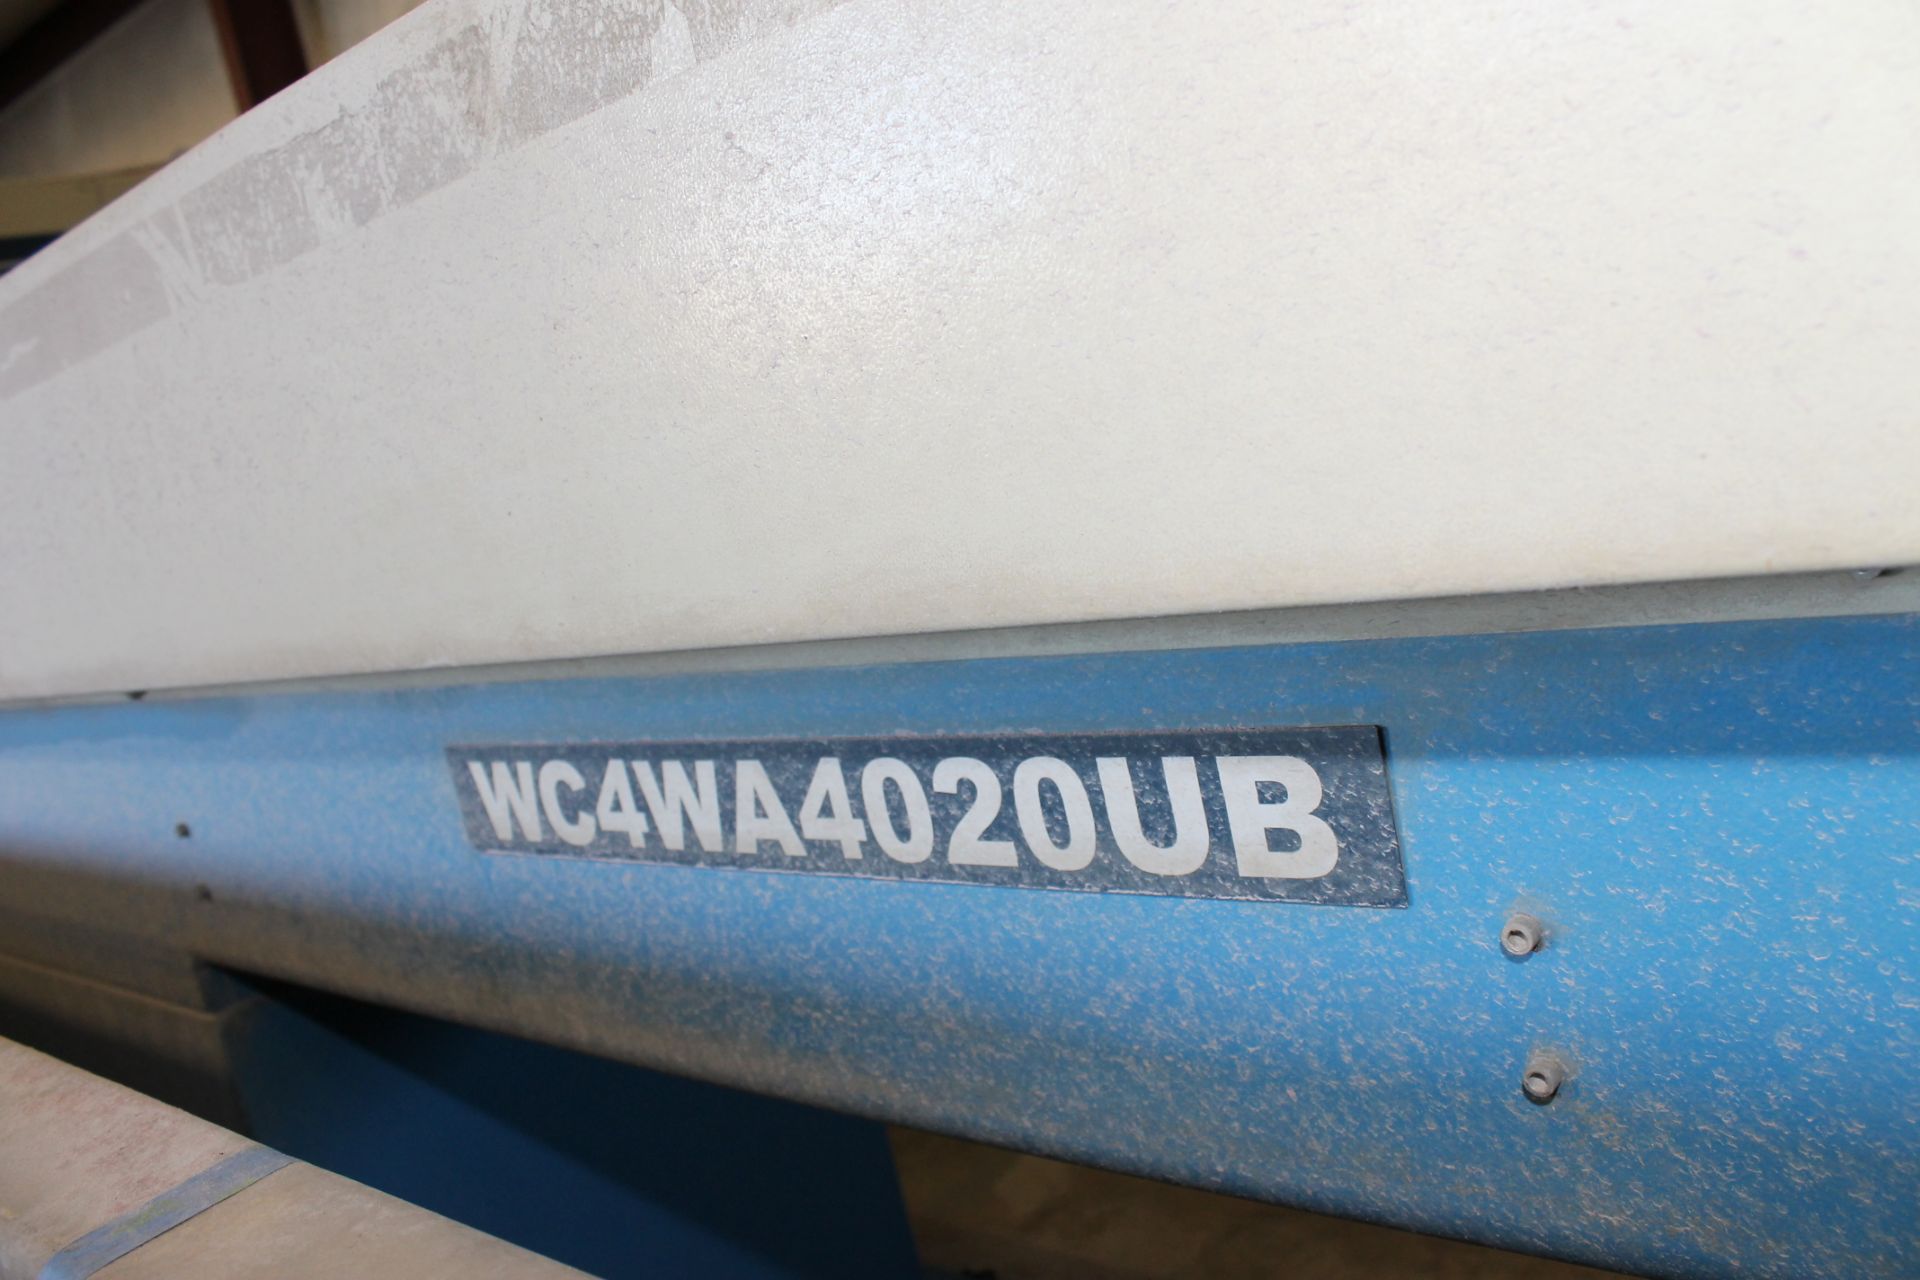 CNC WATERJET CUTTING MACHINE, I.W.M. 6’ X 13’ CUTTING CAP., new 2012, Mdl. WC4WA4020UB, 8’ x 14’ - Image 6 of 7